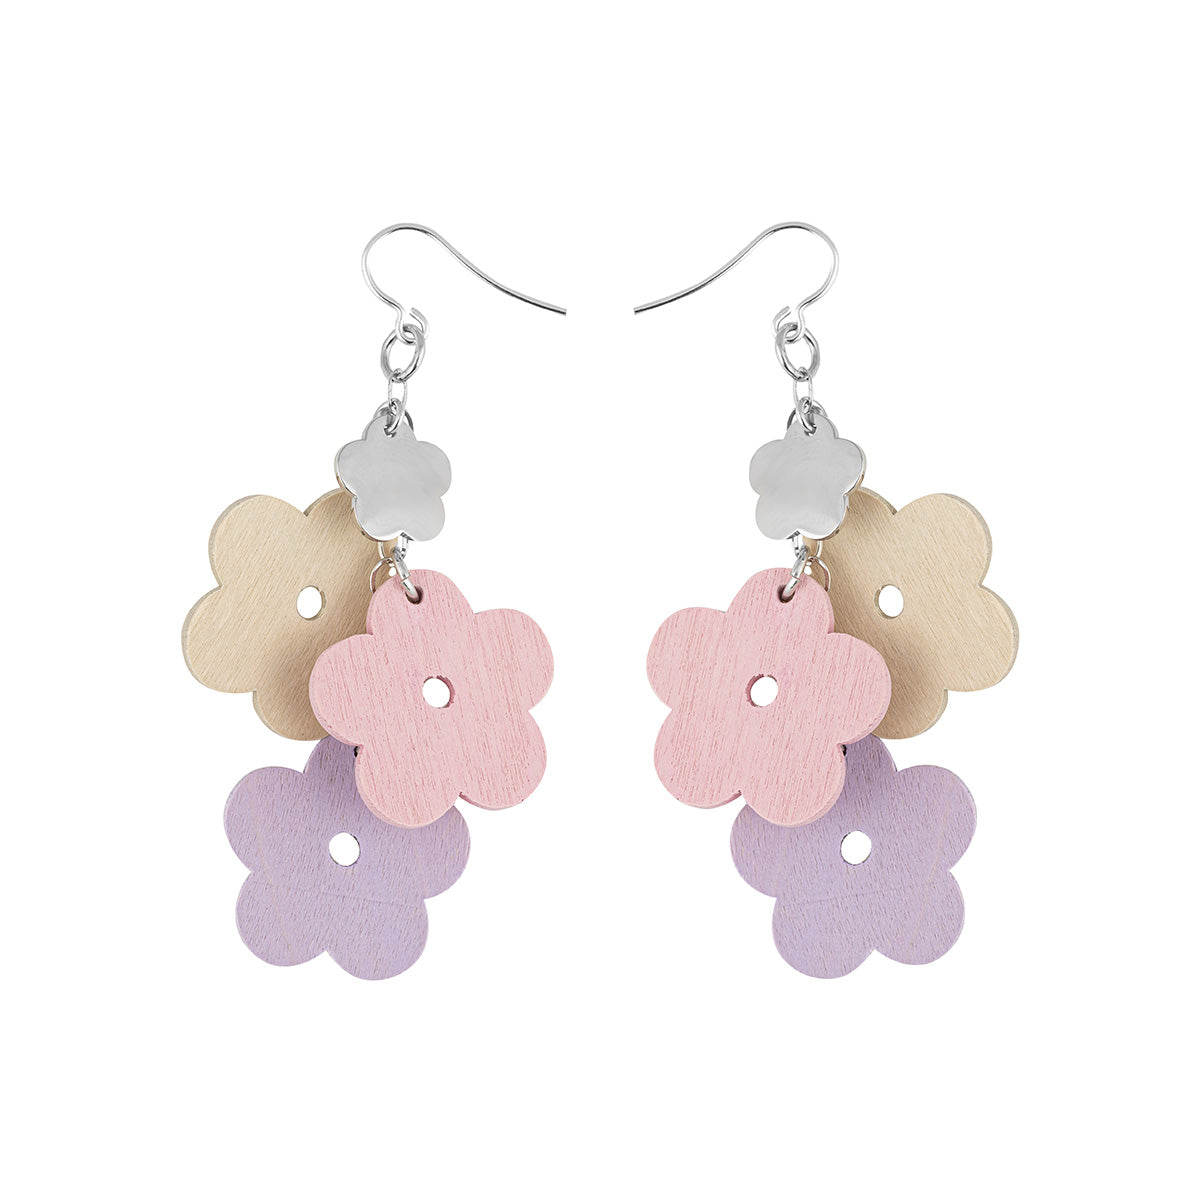 Kukkaniitty earrings, pink